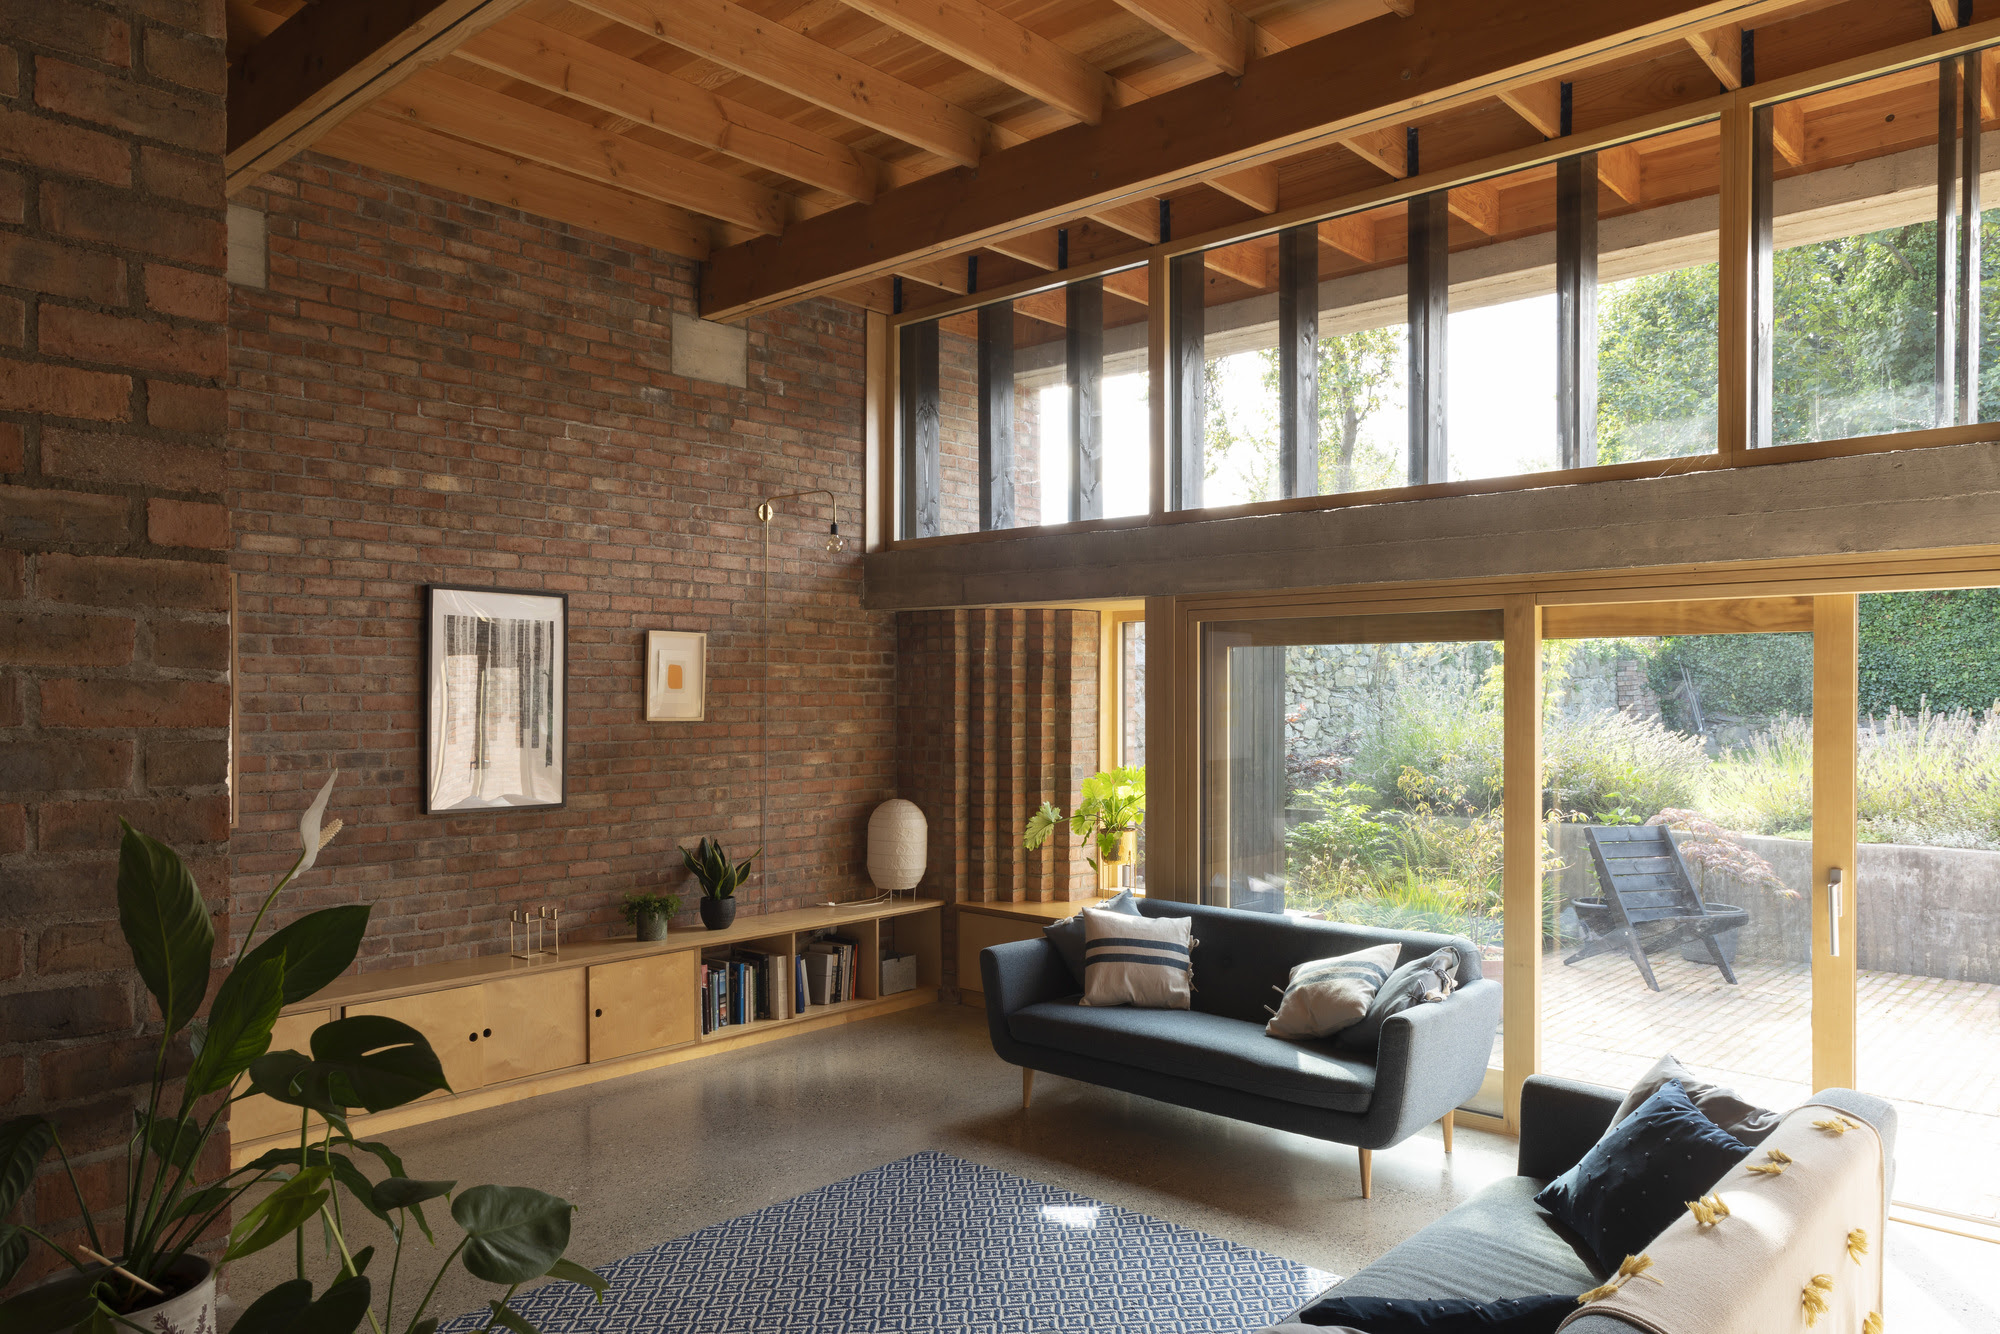 A House, Coach House & Garden / Culligan Architects